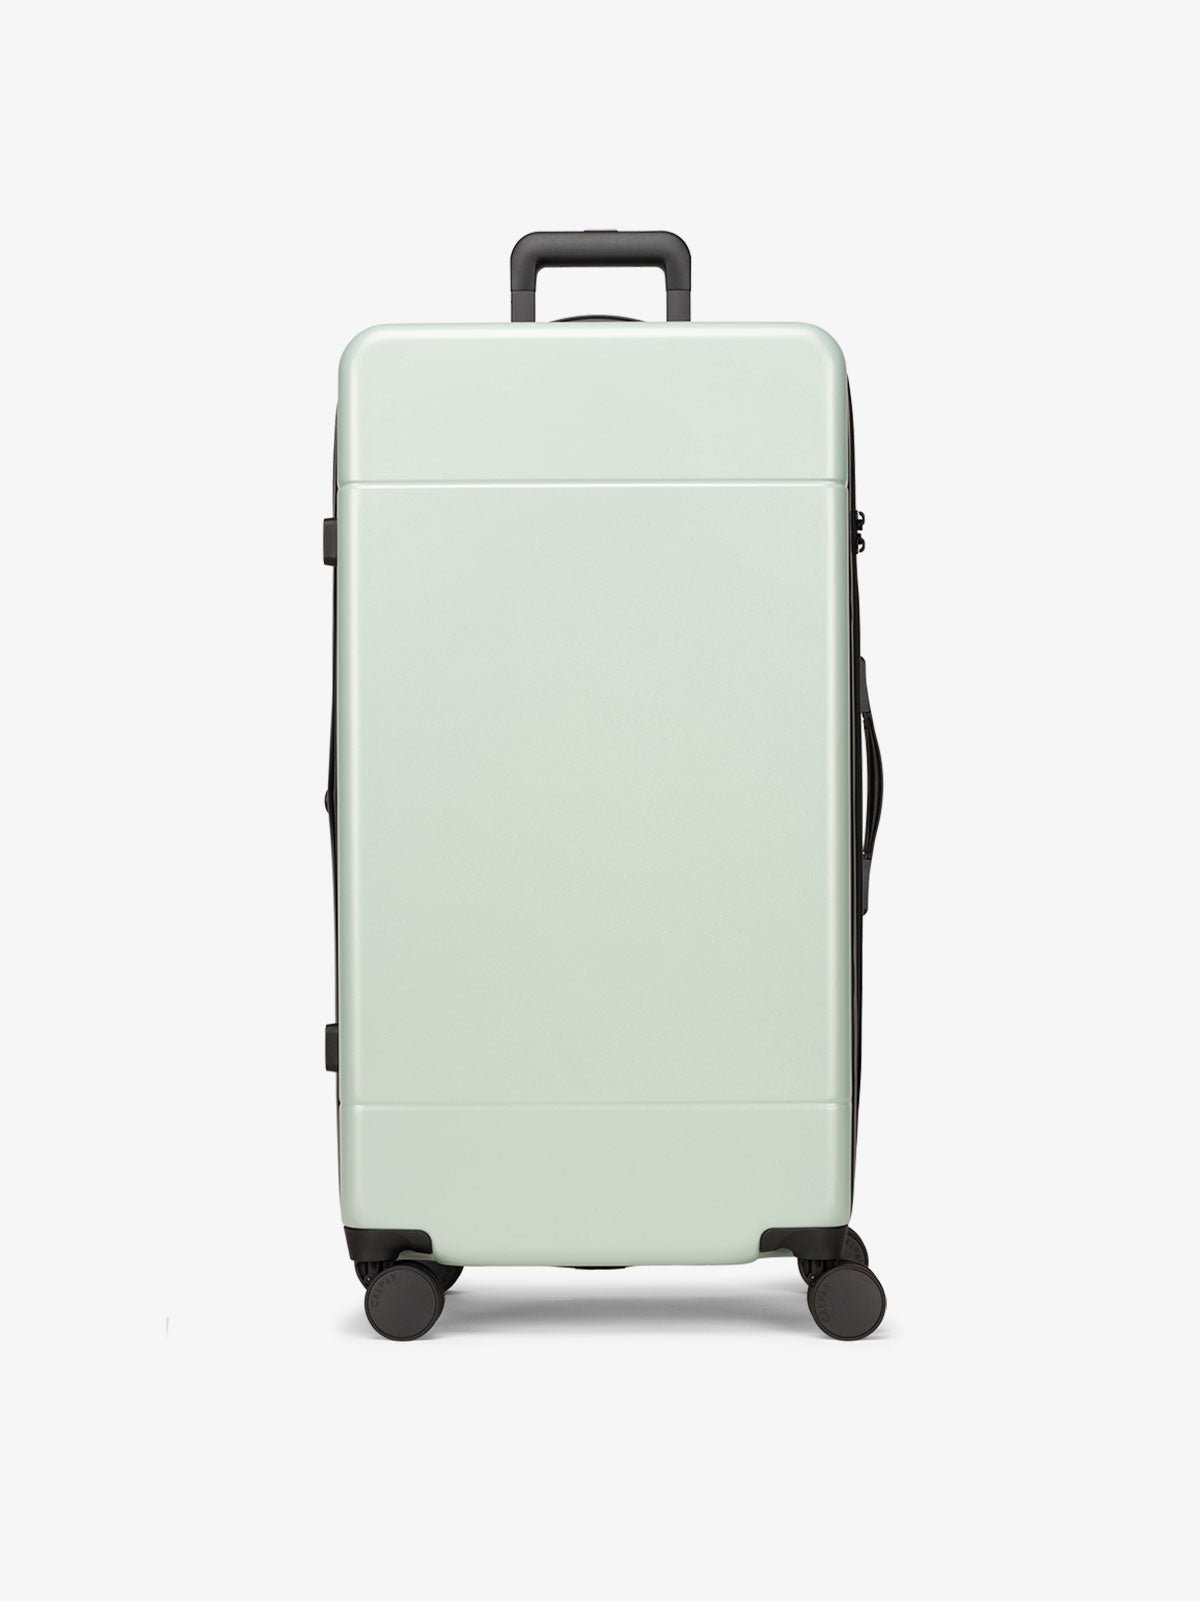 CALPAK Hue hard side polycarbonate trunk luggage in light green jade